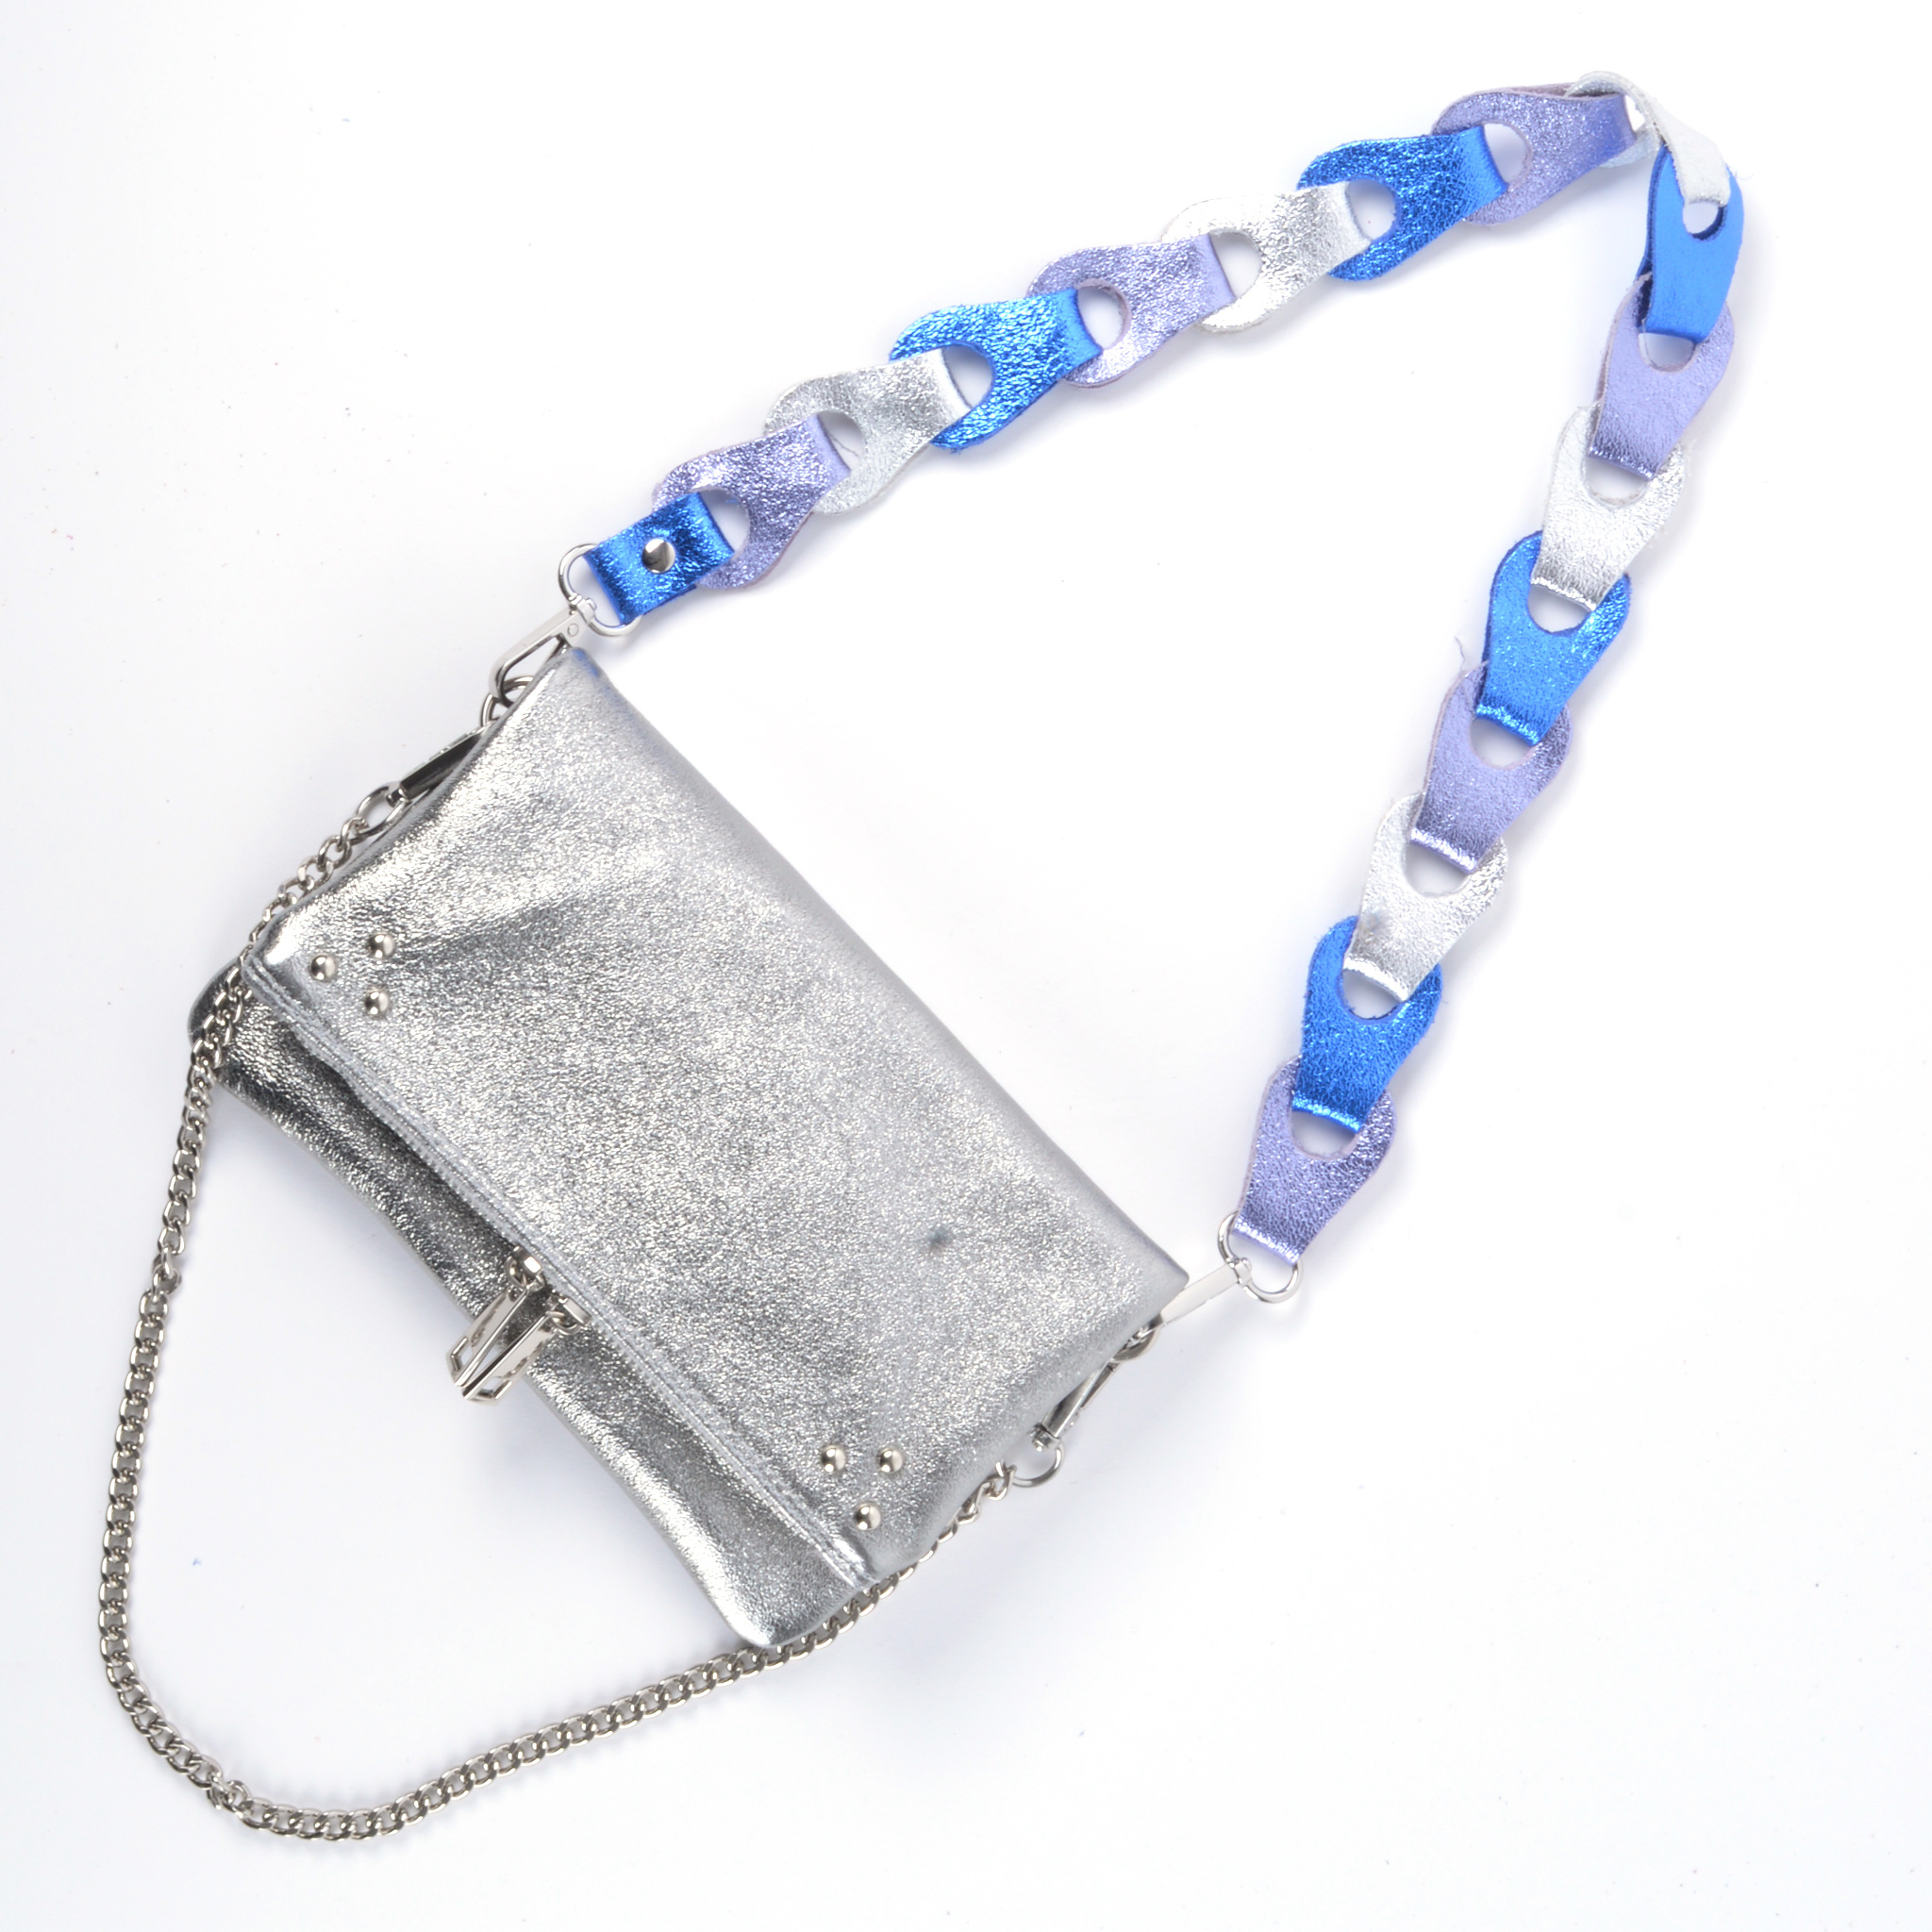 Bagstrap Metallic Braided S blauw blauwe zilveren metallic lange losse tassenhengsel tassenband leer leder kopen bestellen nu